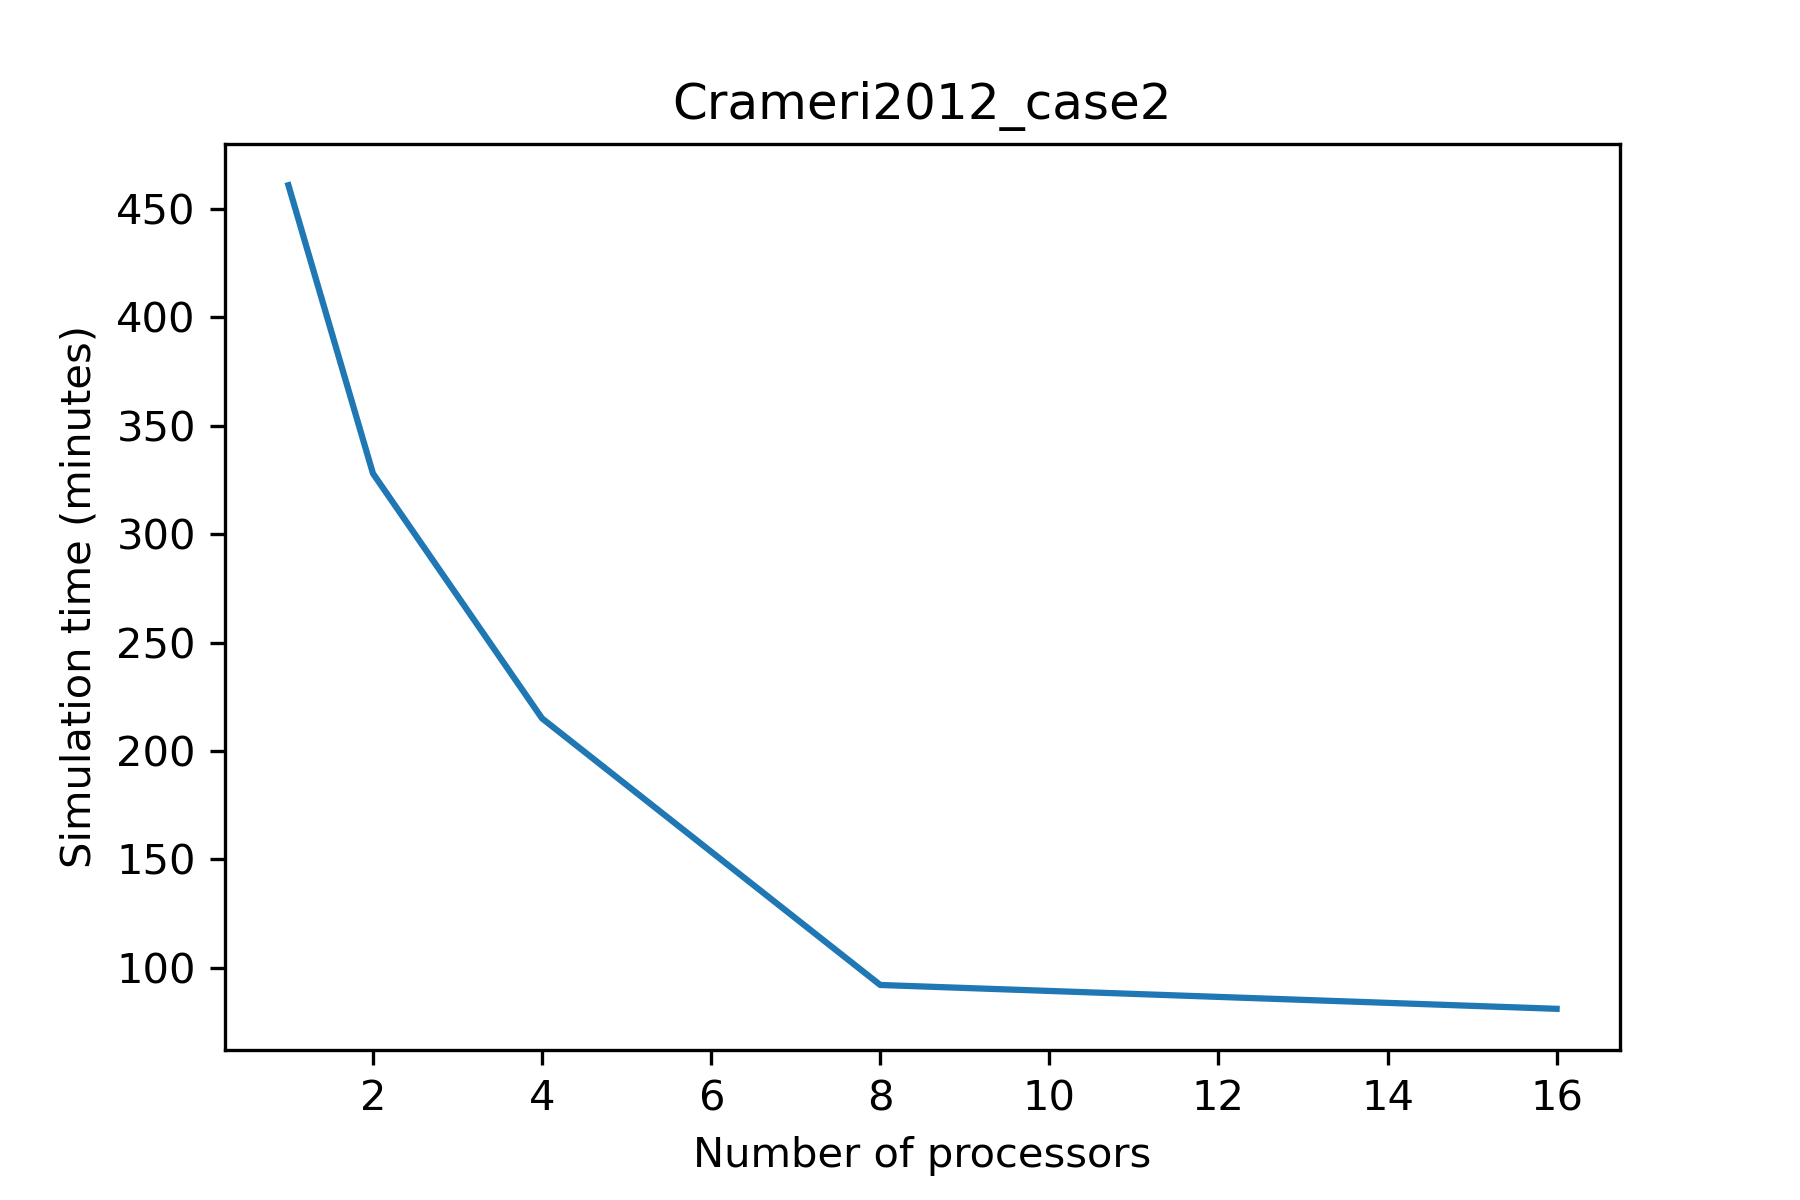 Scaling results for Crameri2012_case2